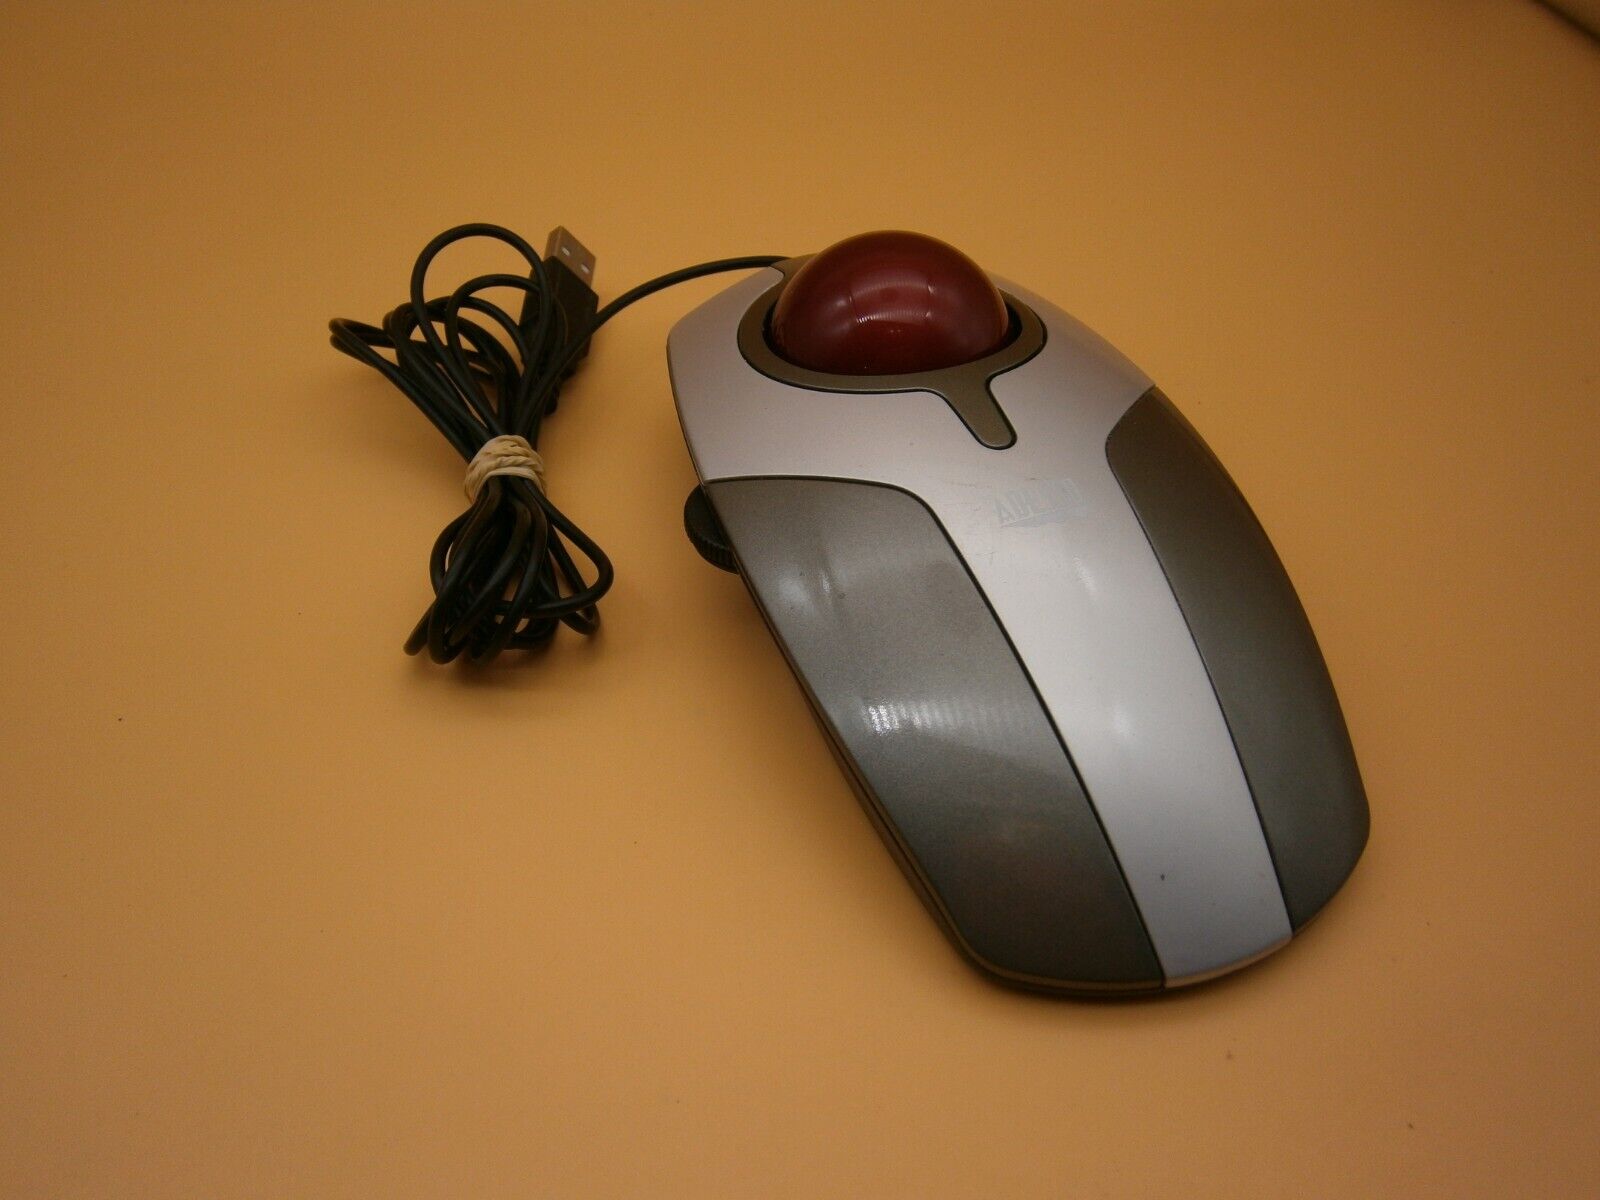 Adesso Desktop Optical Trackball Mouse USB Corded iMouse T1